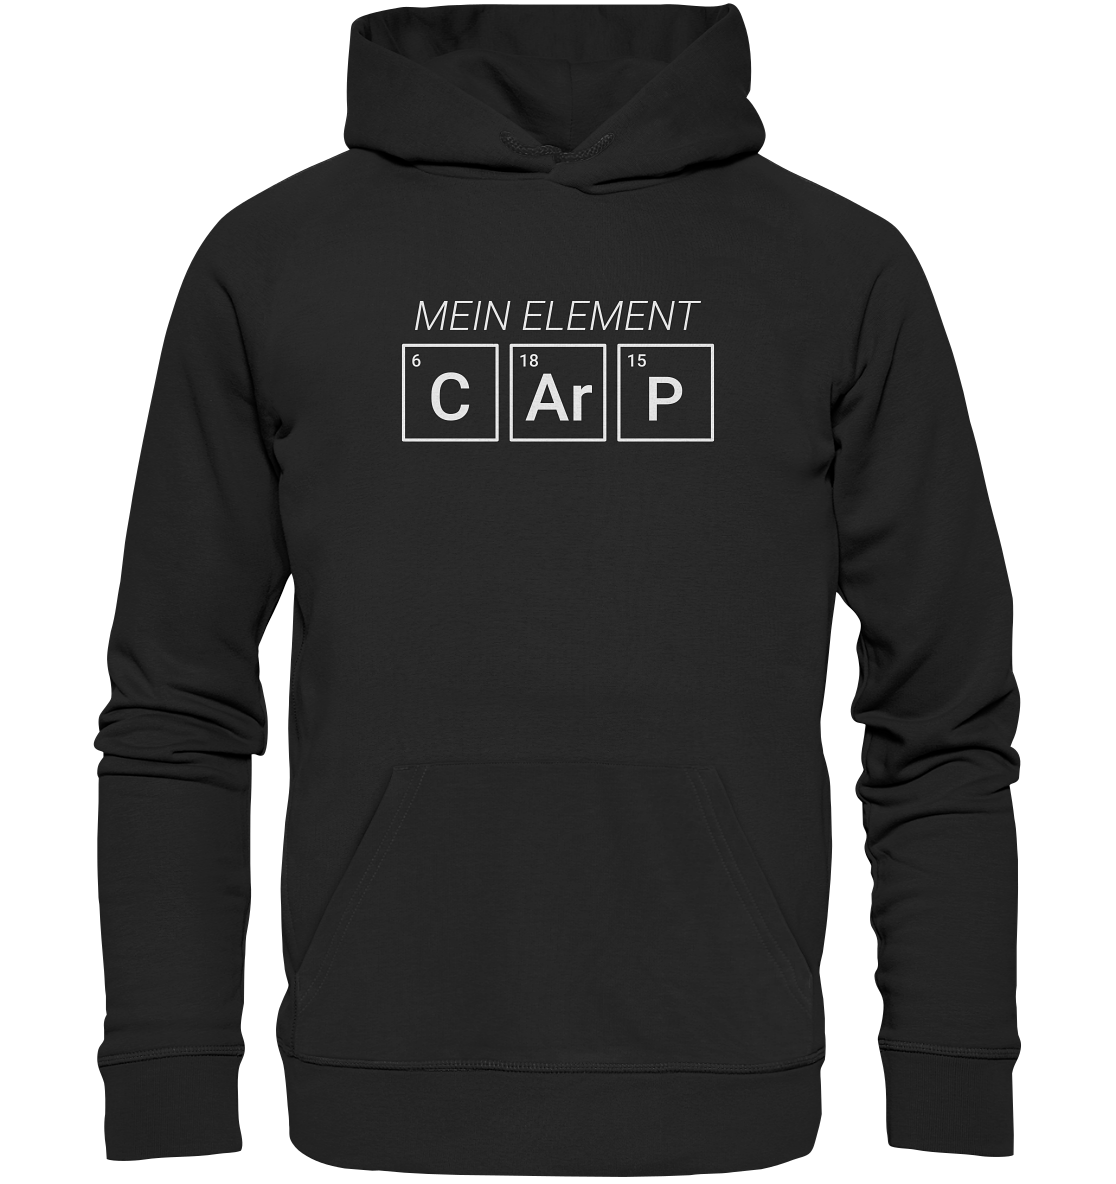 Carp Mein Element Periodensystem - Premium Bio Hoodie